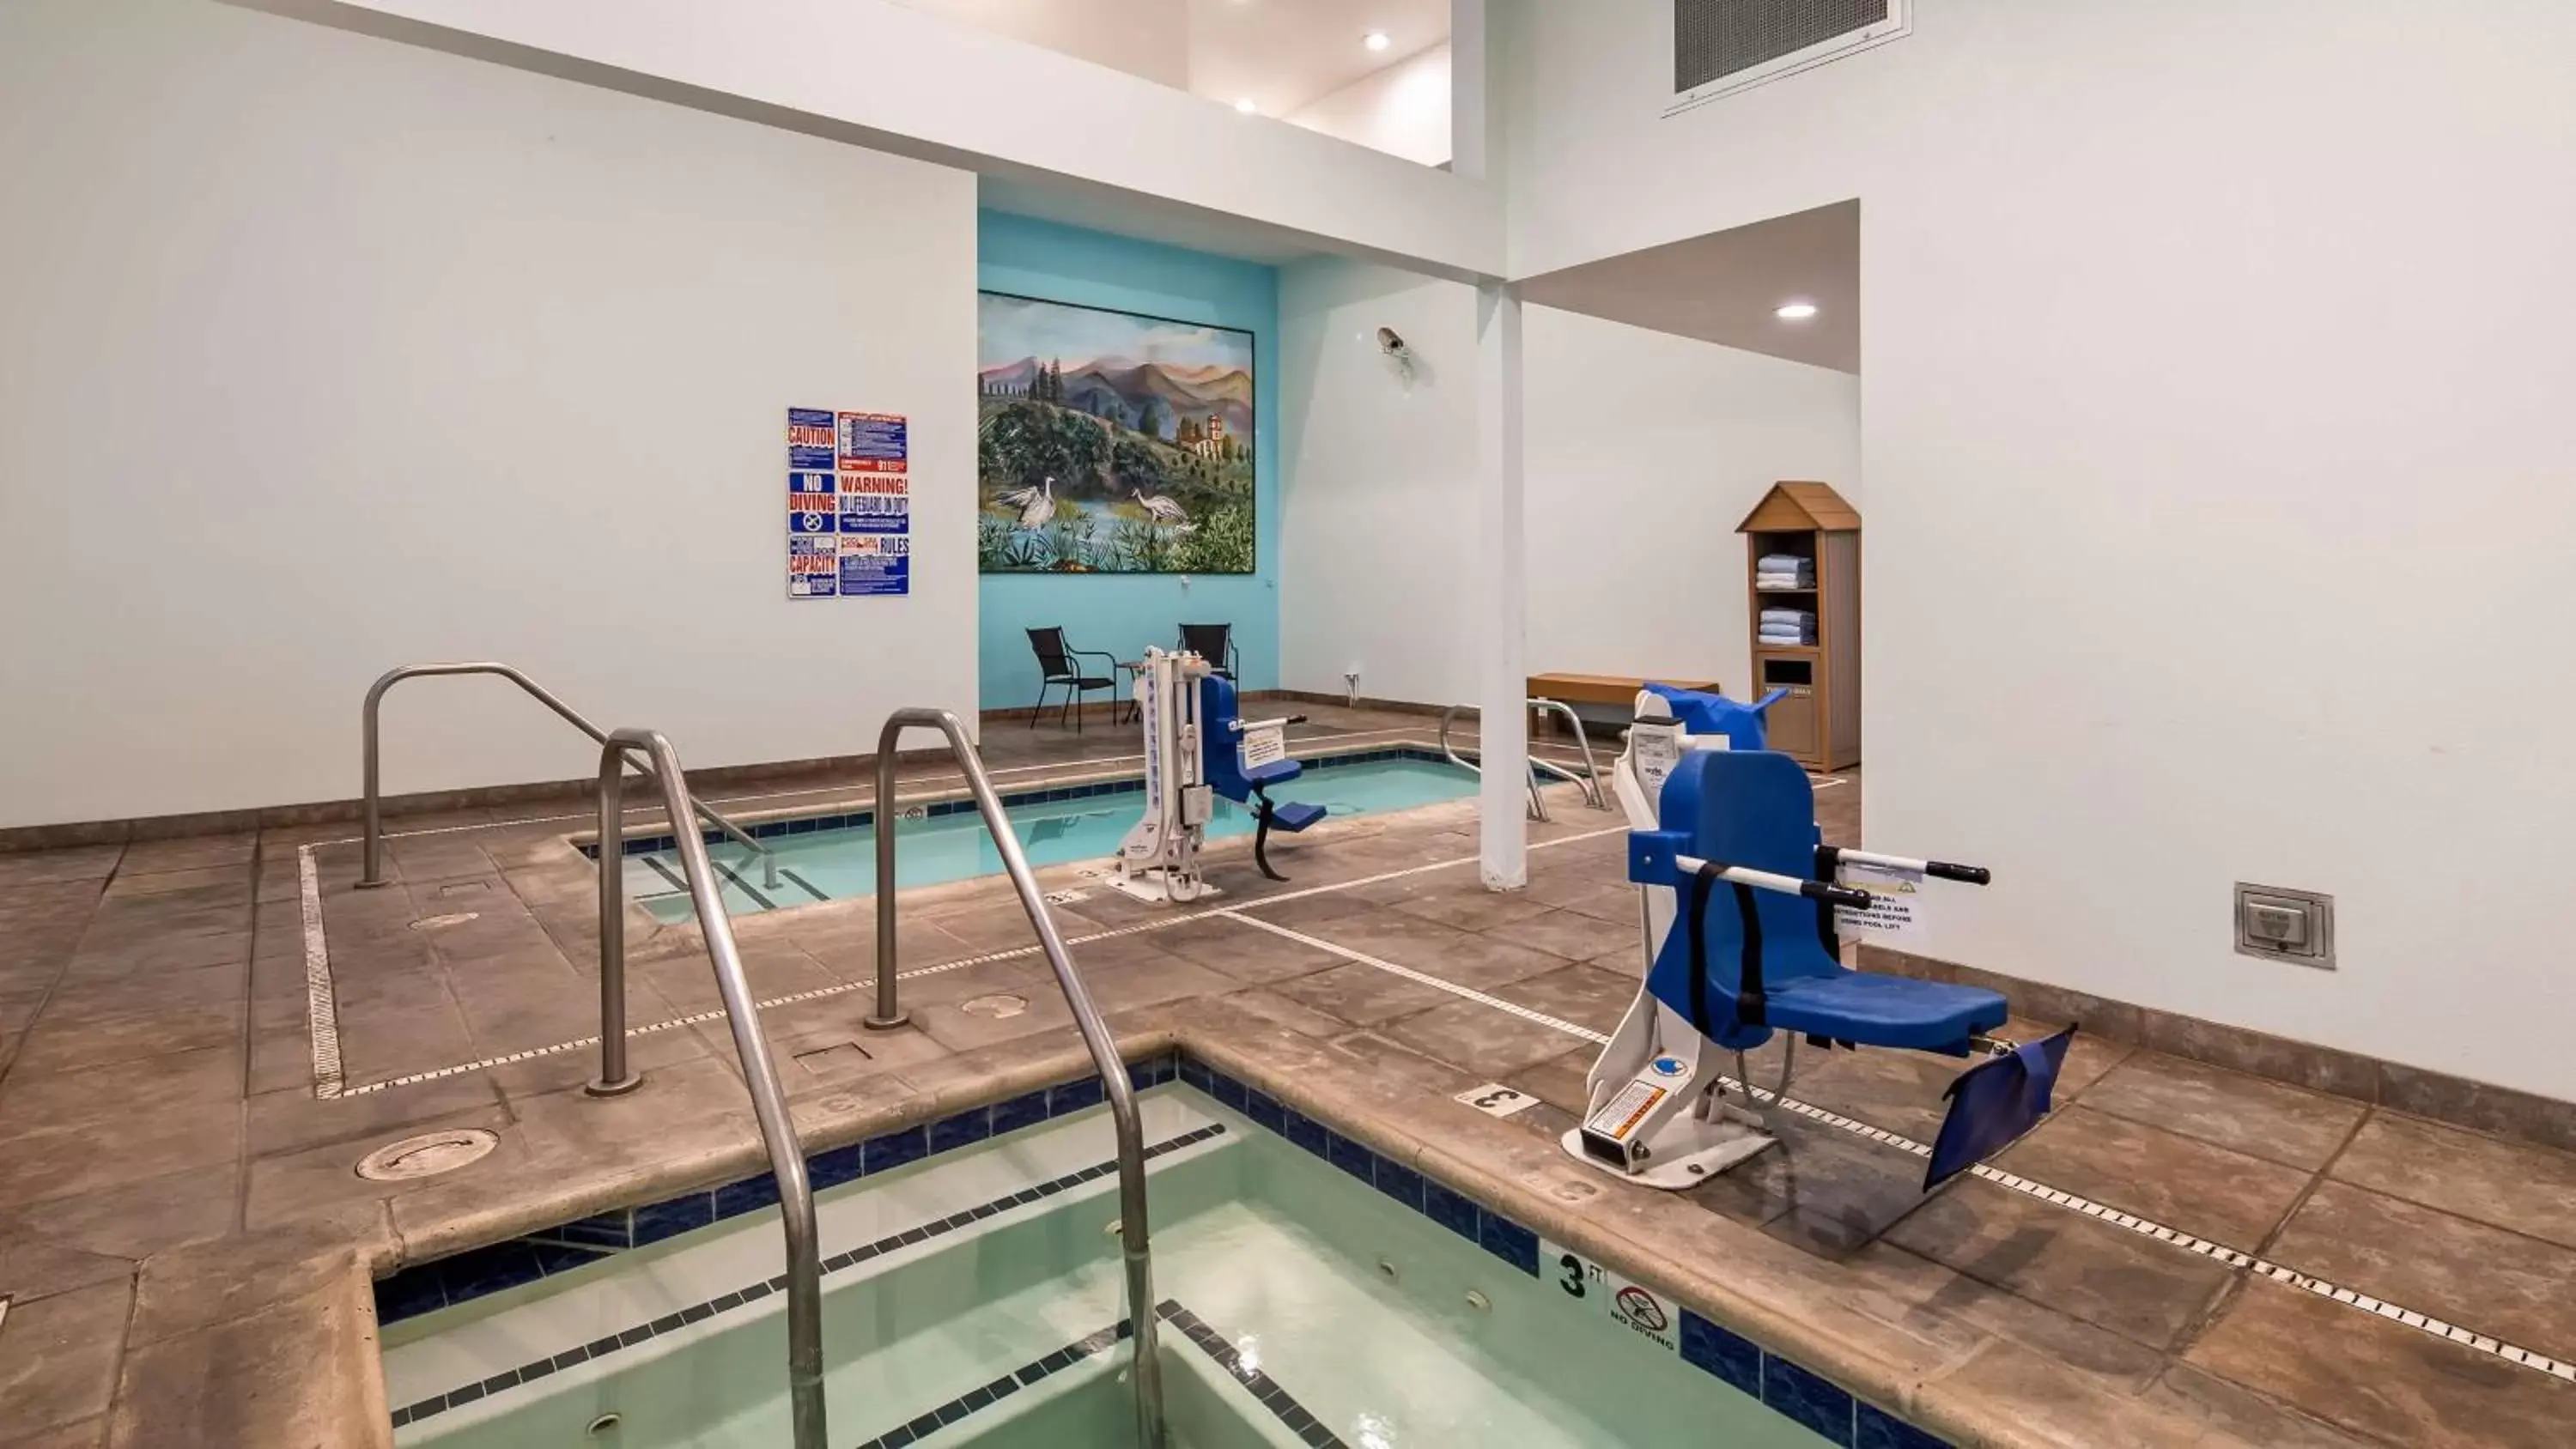 On site, Swimming Pool in Best Western I-5 Inn & Suites